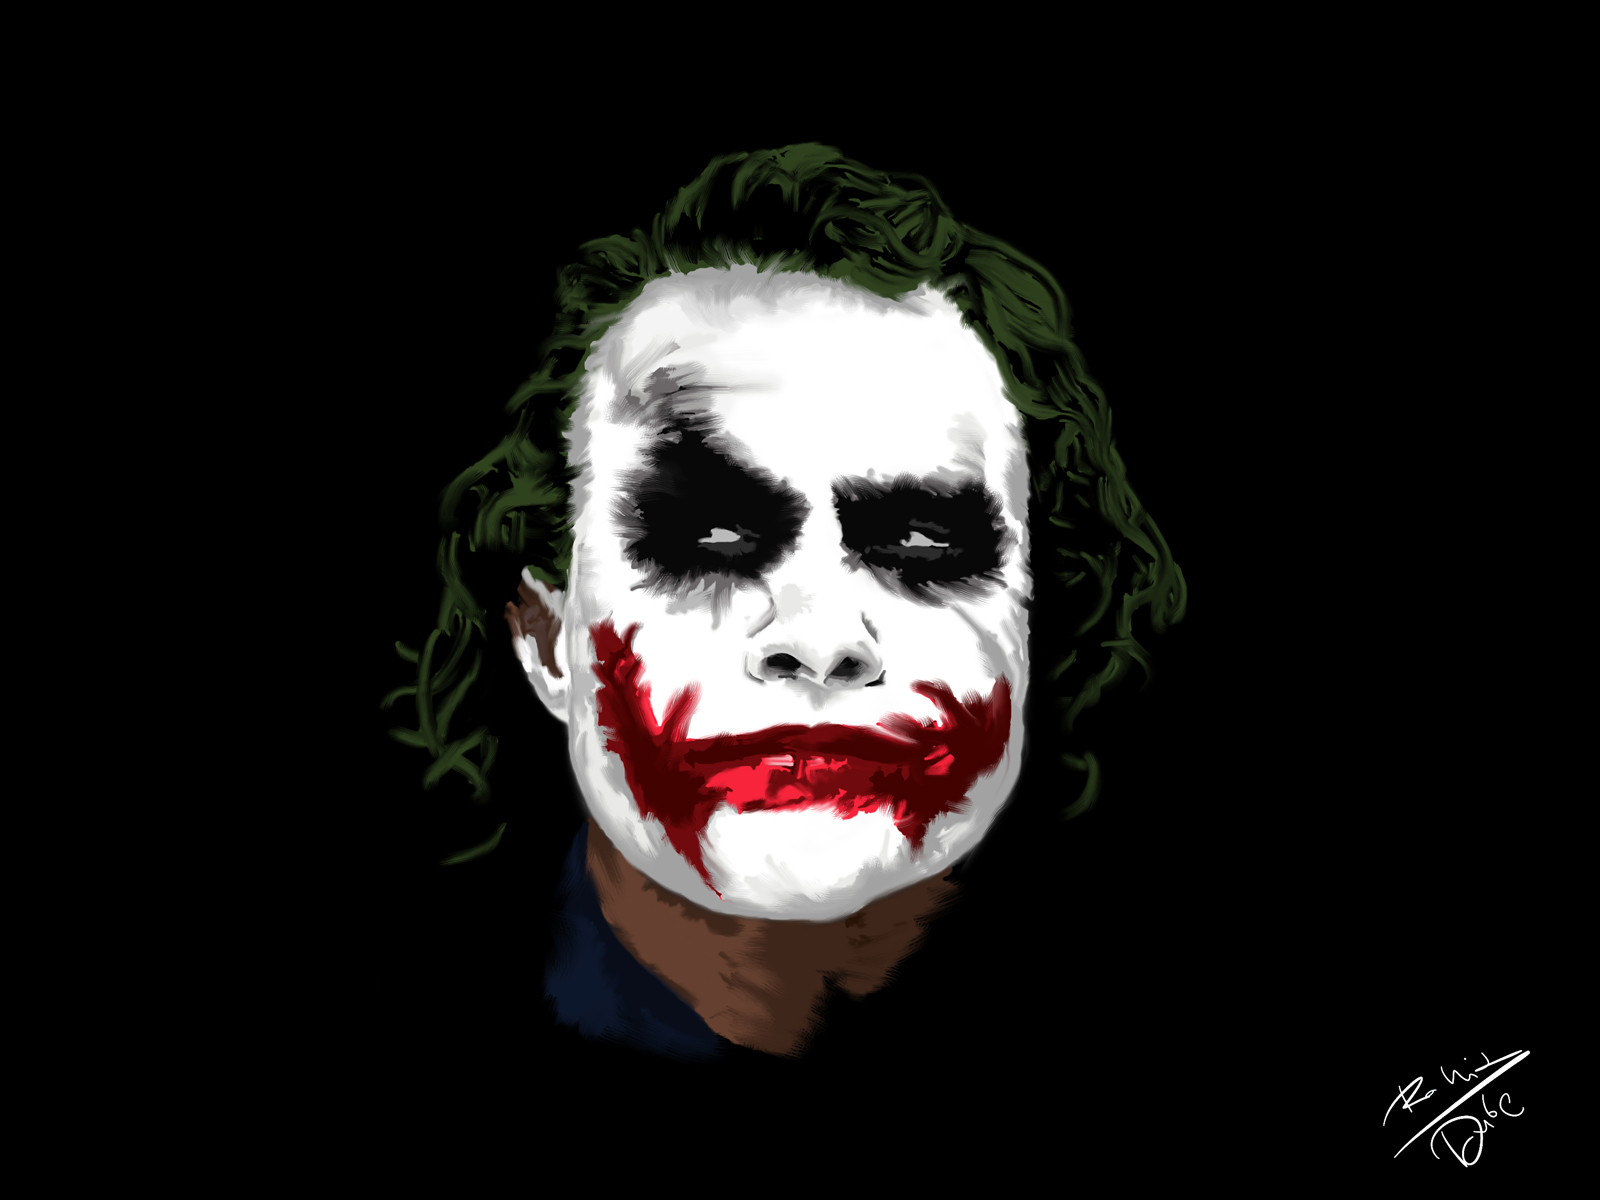 Joker (Heath Ledger) by Rohit Dubey on Dribbble